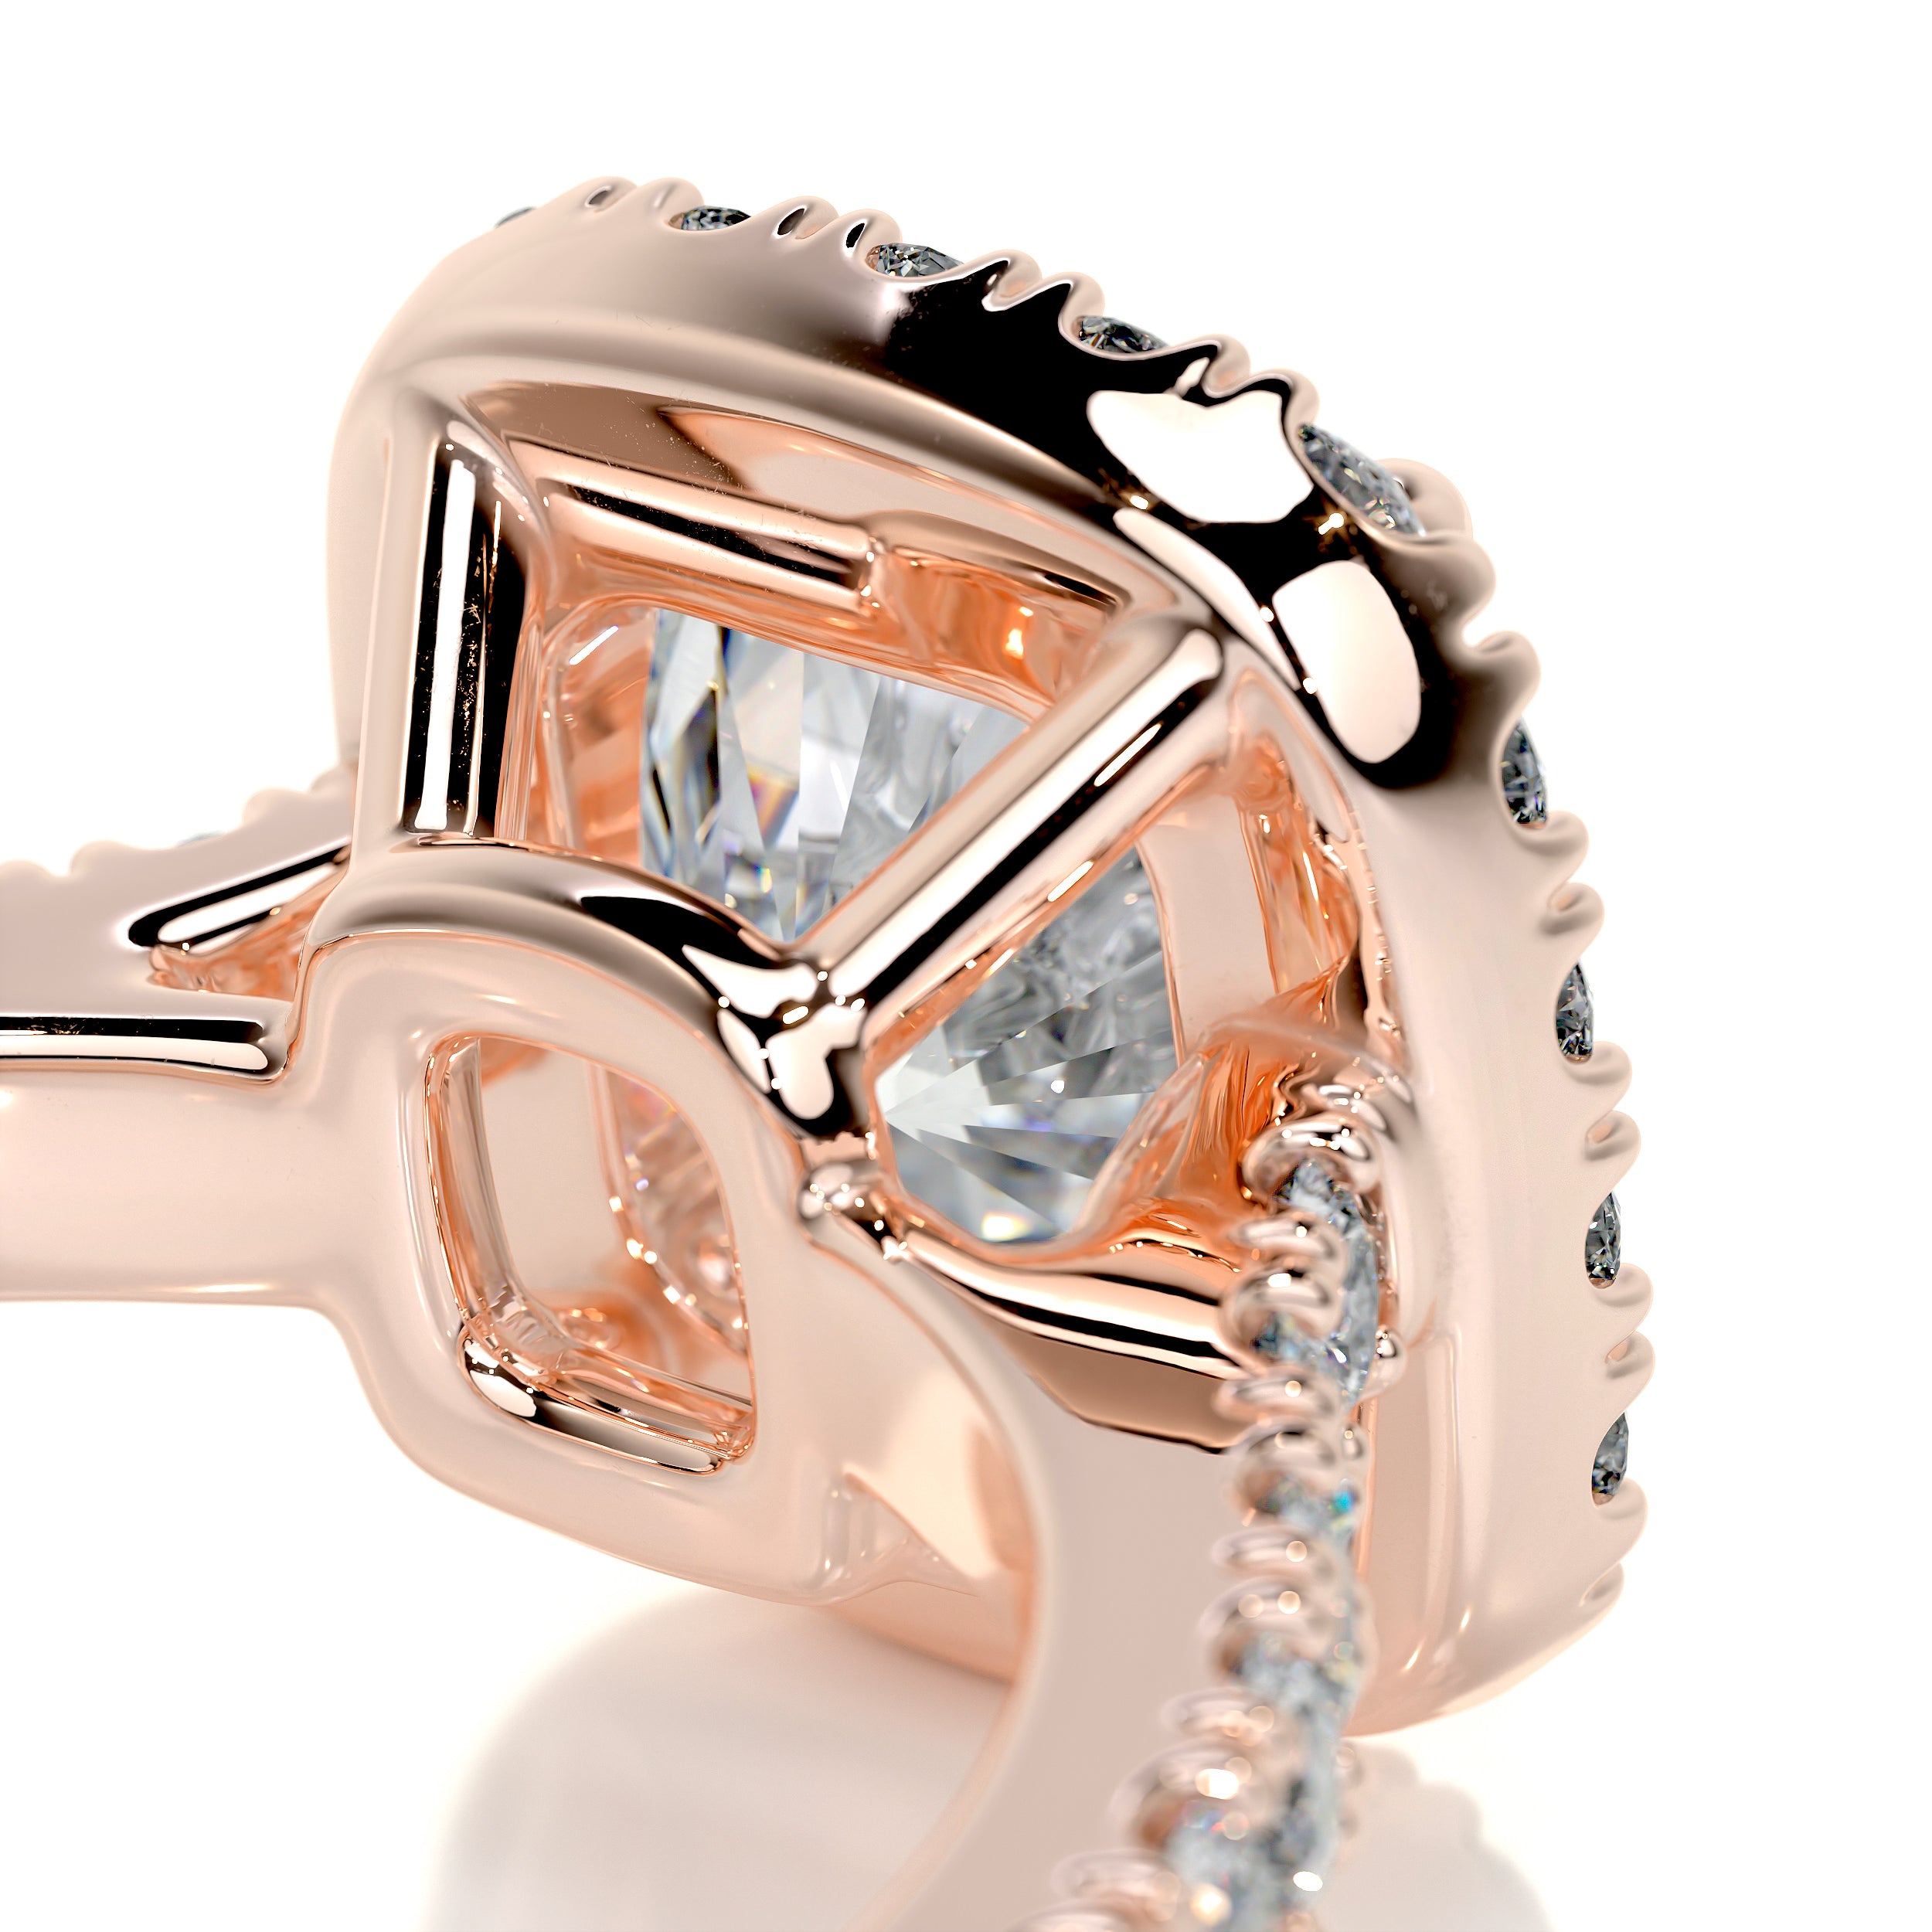 Celeste Diamond Engagement Ring   (2 Carat) -14K Rose Gold